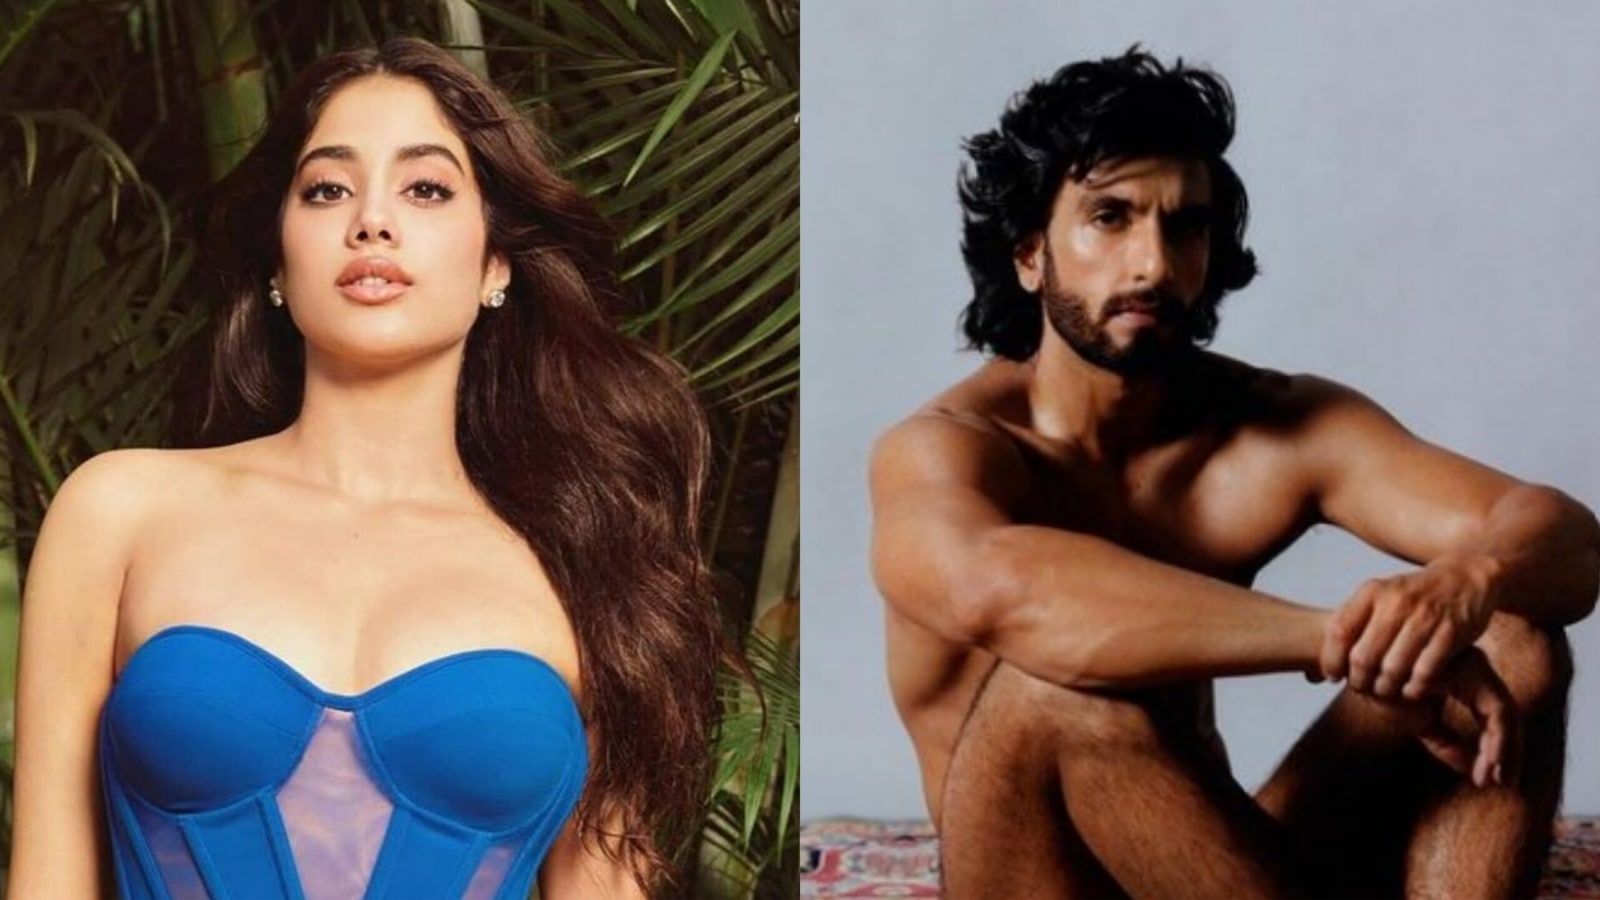 True Nudist Sex - Janhvi Kapoor reacts to Ranveer Singh's nude photoshoot: 'It's artistic  freedom' | Bollywood - Hindustan Times